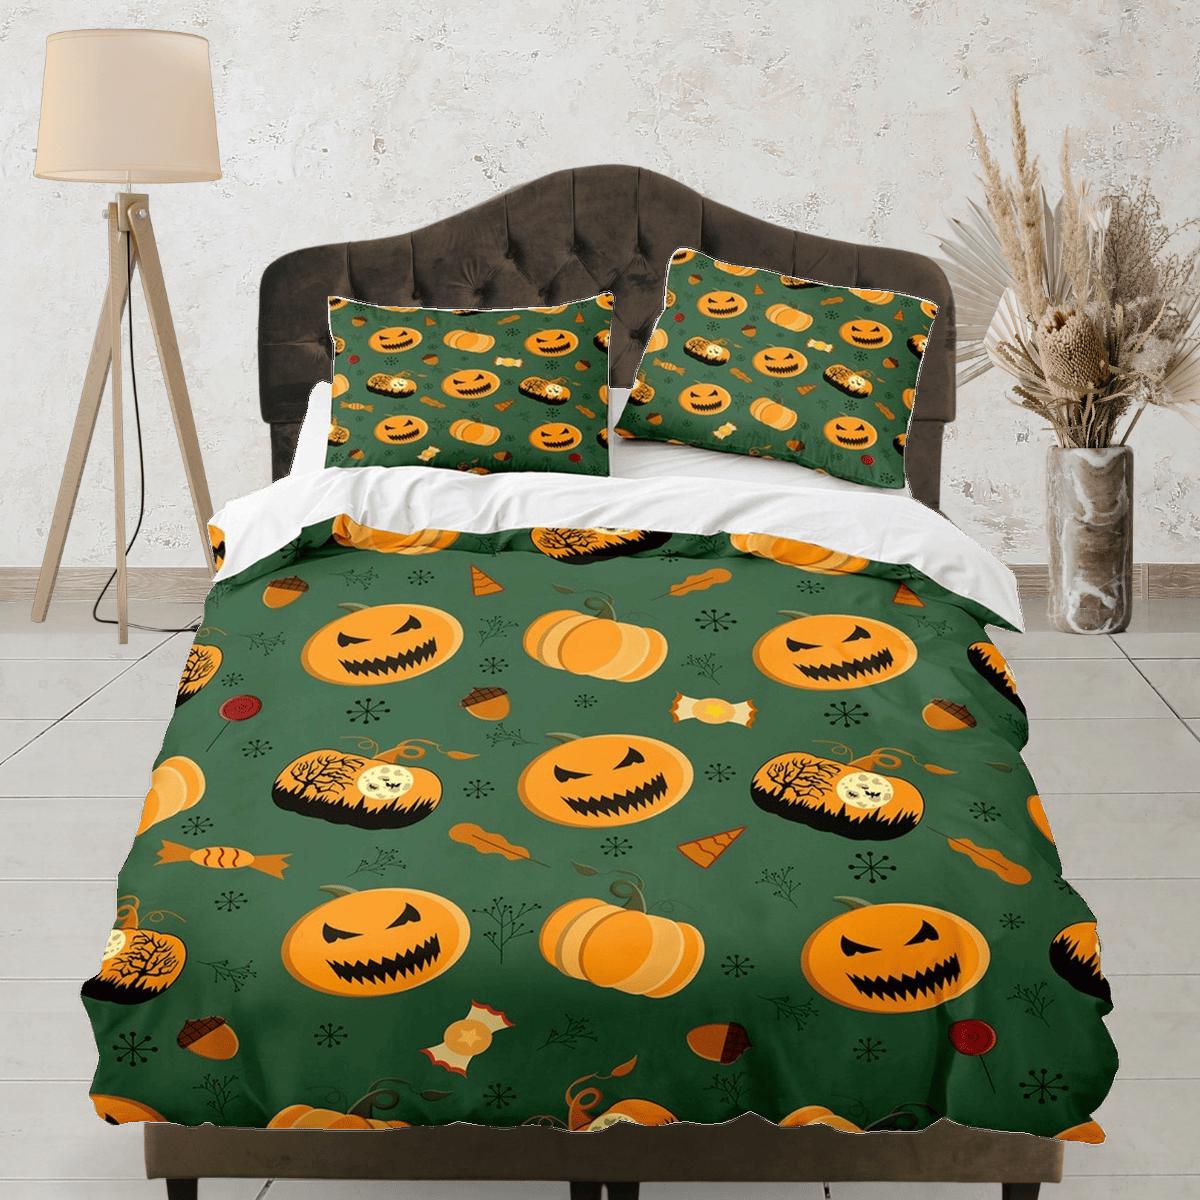 daintyduvet Pumpkin halloween full bedding & pillowcase, green duvet cover set dorm bedding, halloween decor, nursery toddler bedding, halloween gift